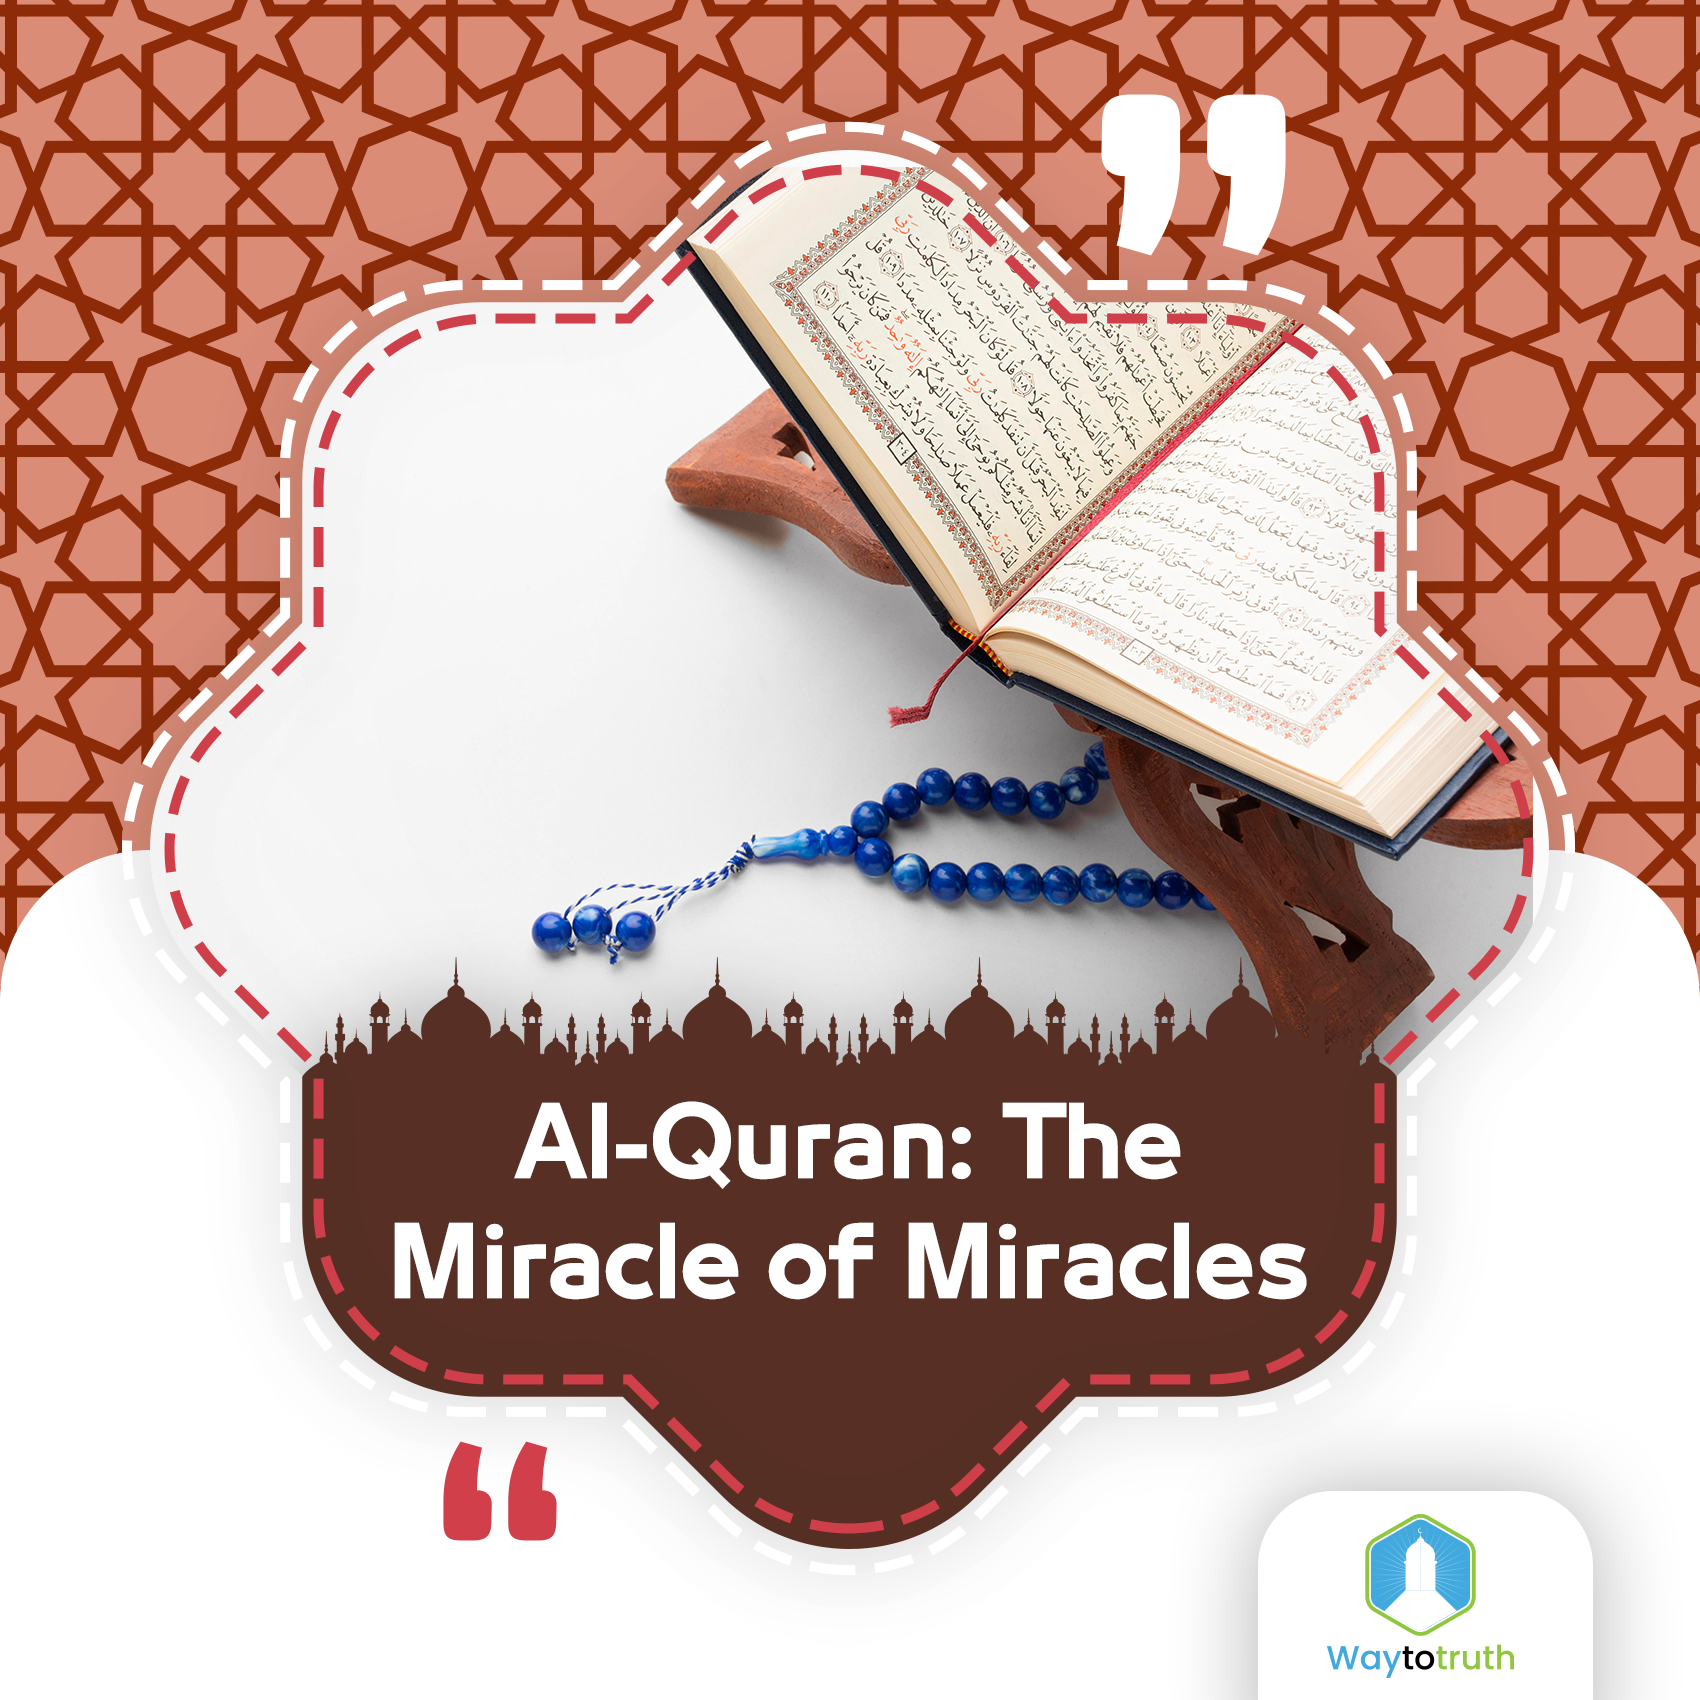 Al-Quran: The Miracle of Miracles